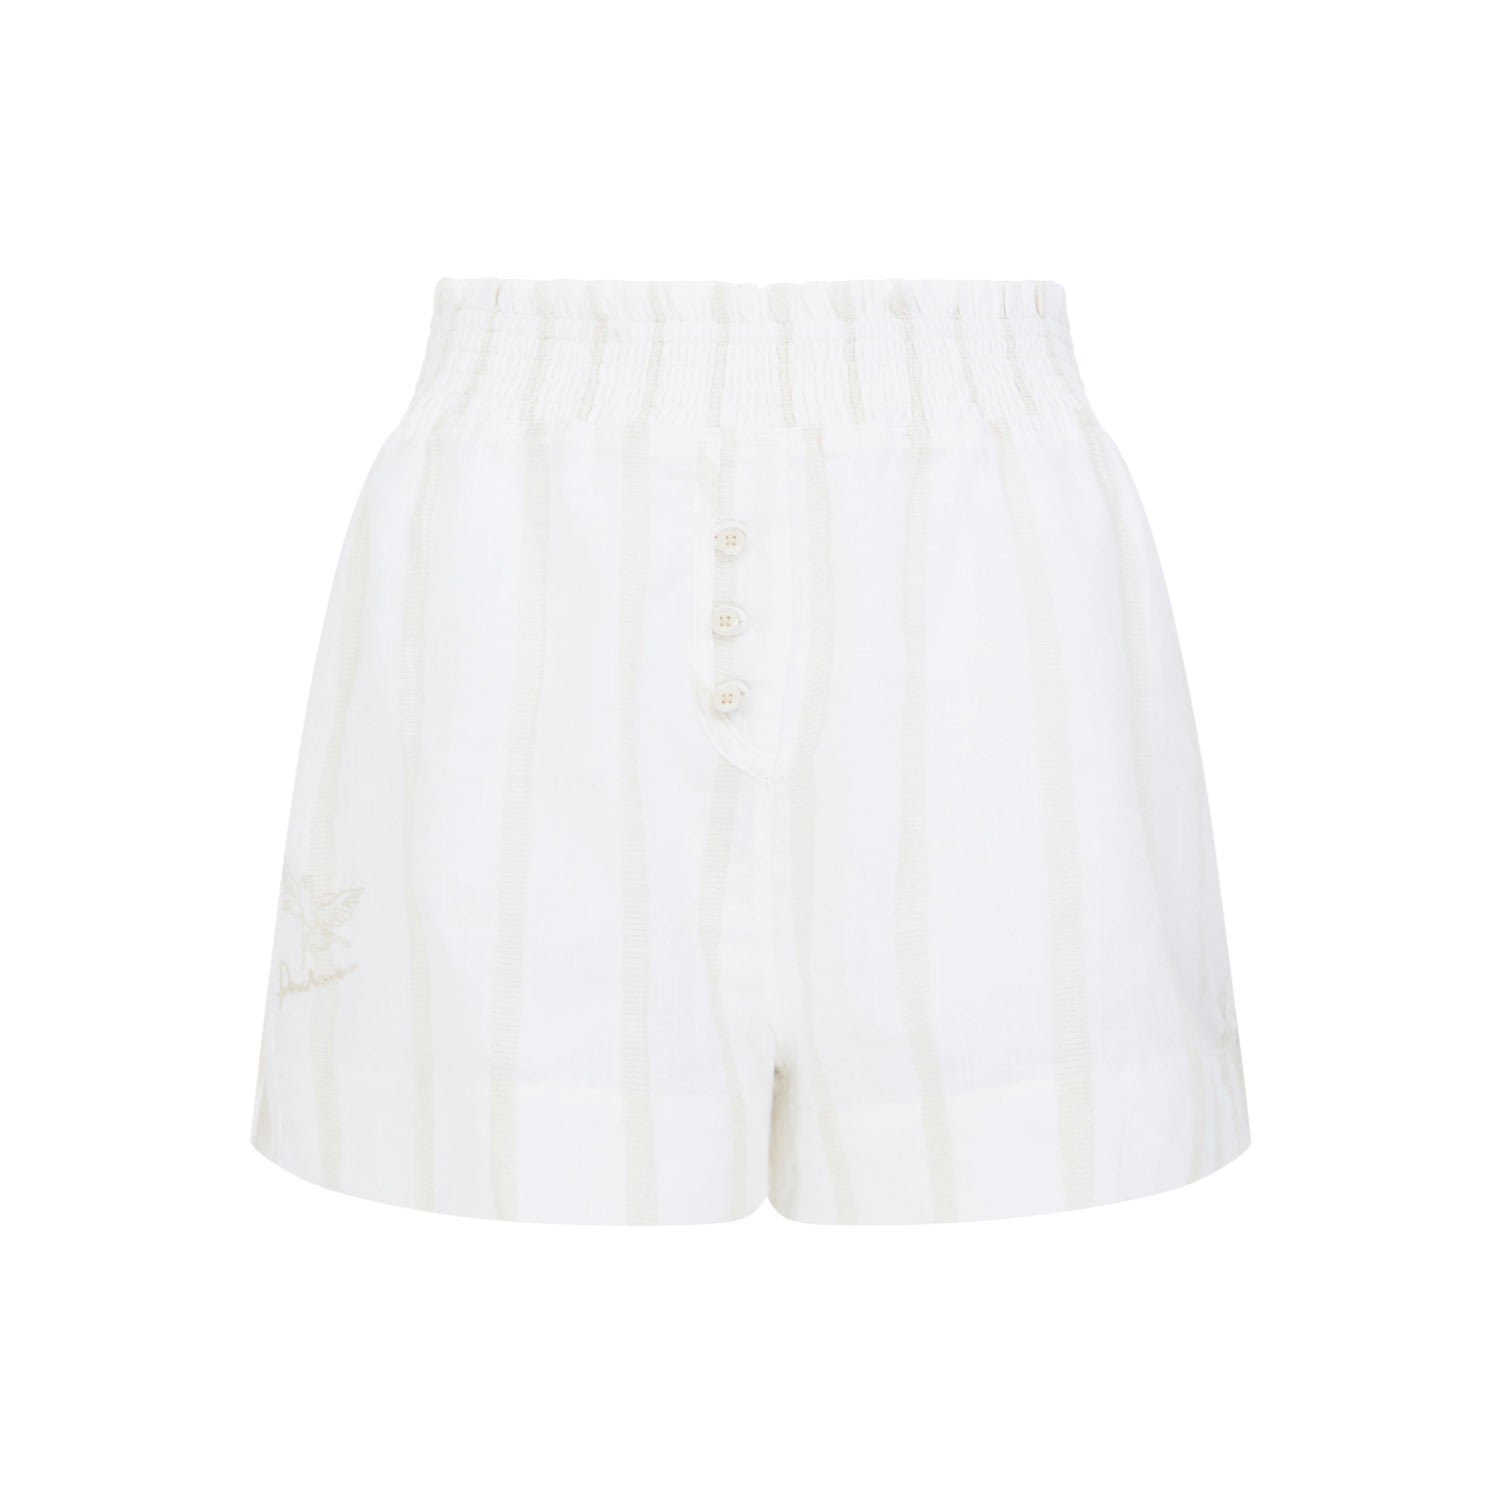 Peachaus Women's Neutrals Lomandra Cotton Pyjama Shorts - Summer Sand Beige